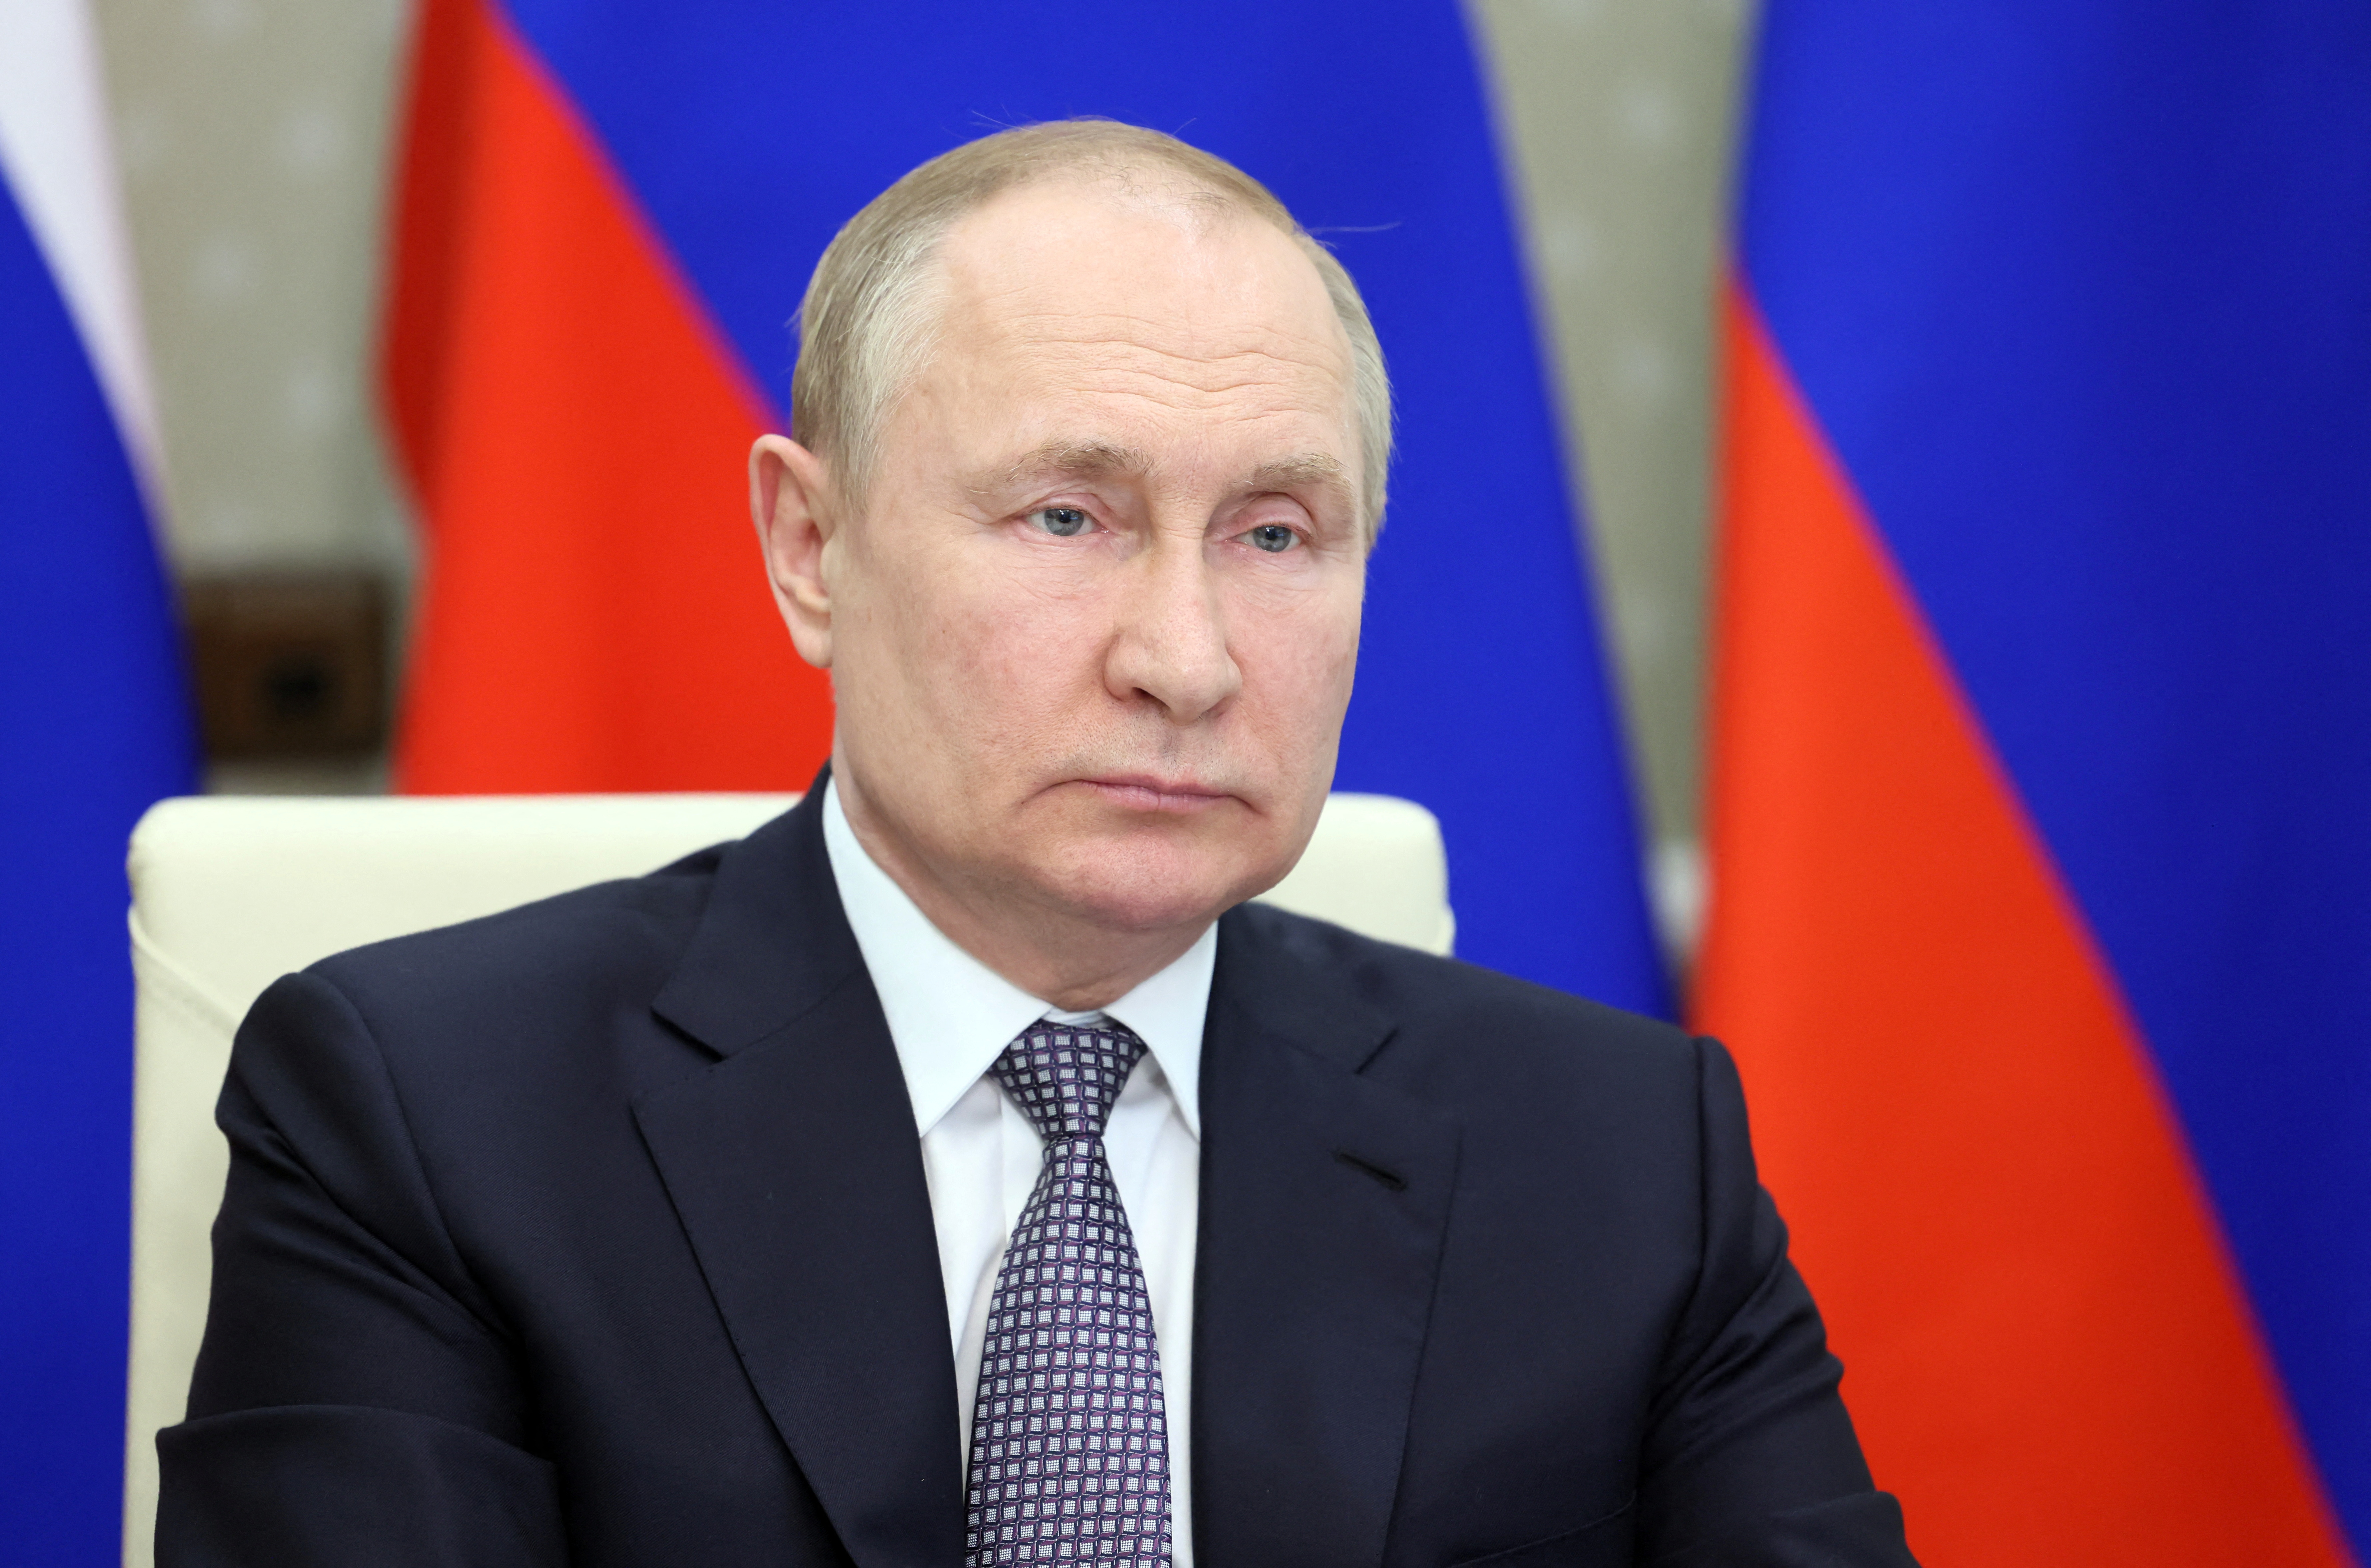 El presidente ruso Vladimir Putin durante la cumbre de los BRICS la semana pasada (Sputnik/Mikhail Metzel/Kremlin via REUTERS)